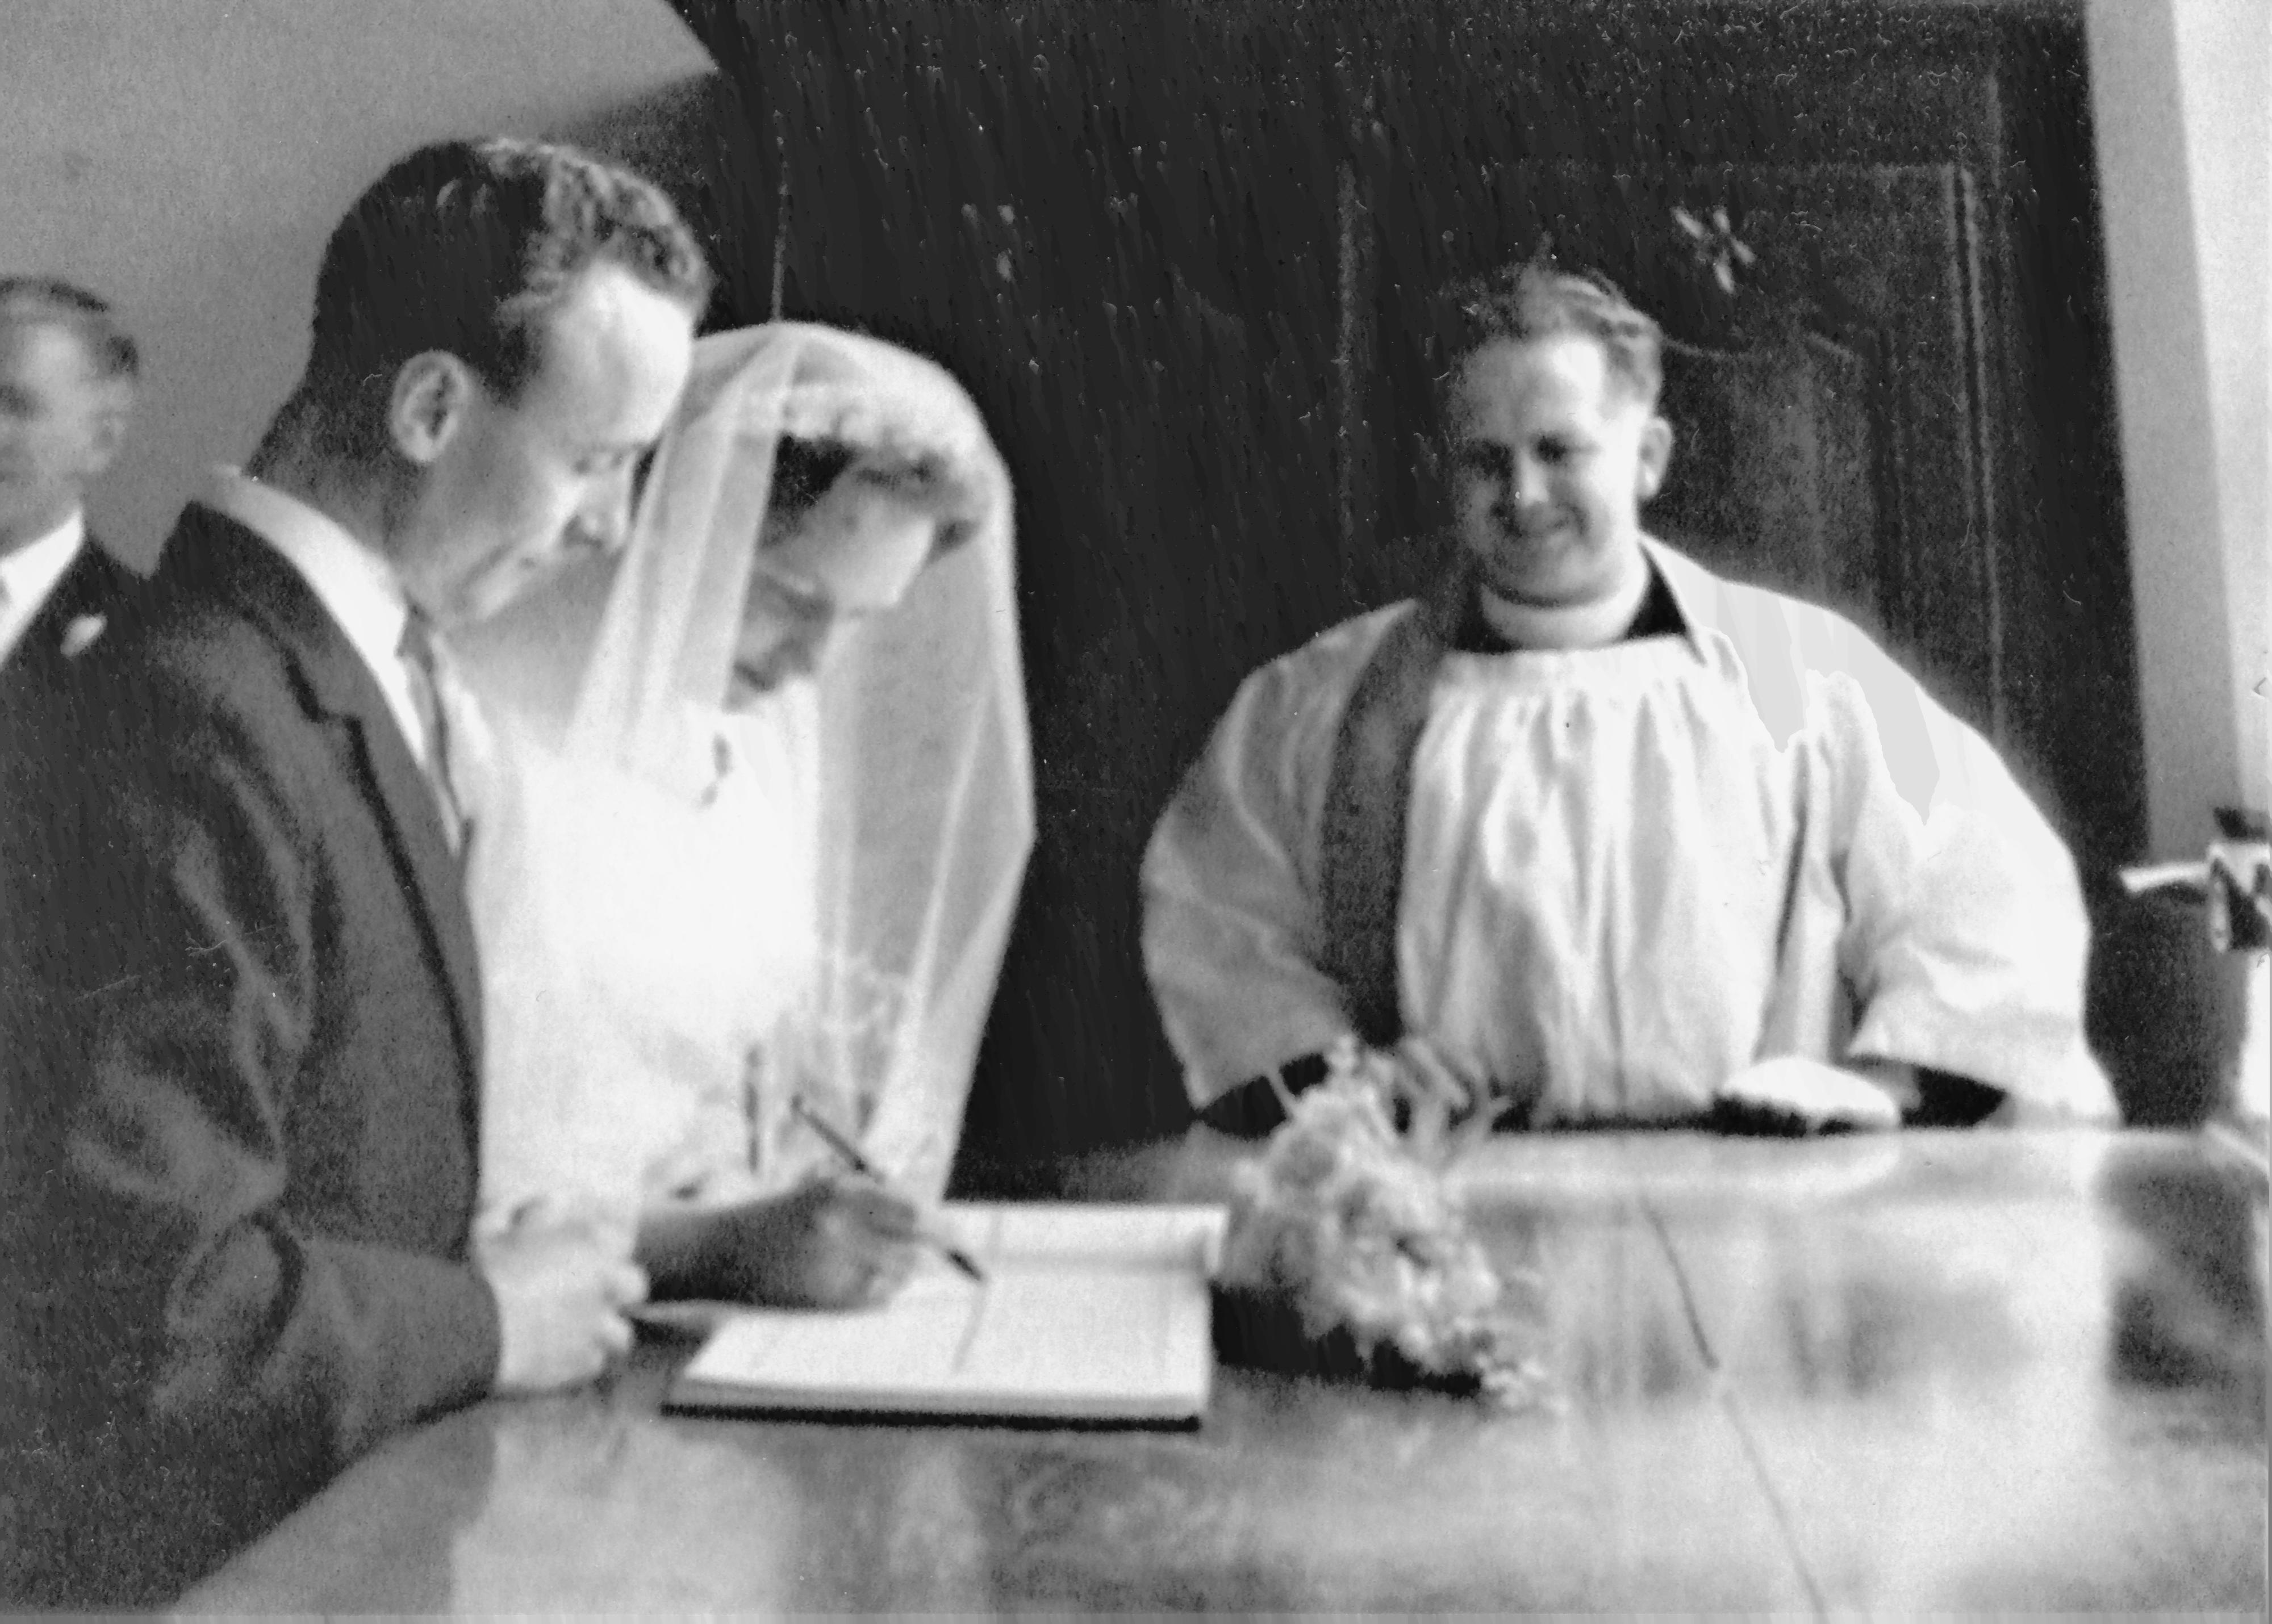 Vickers wedding 1959